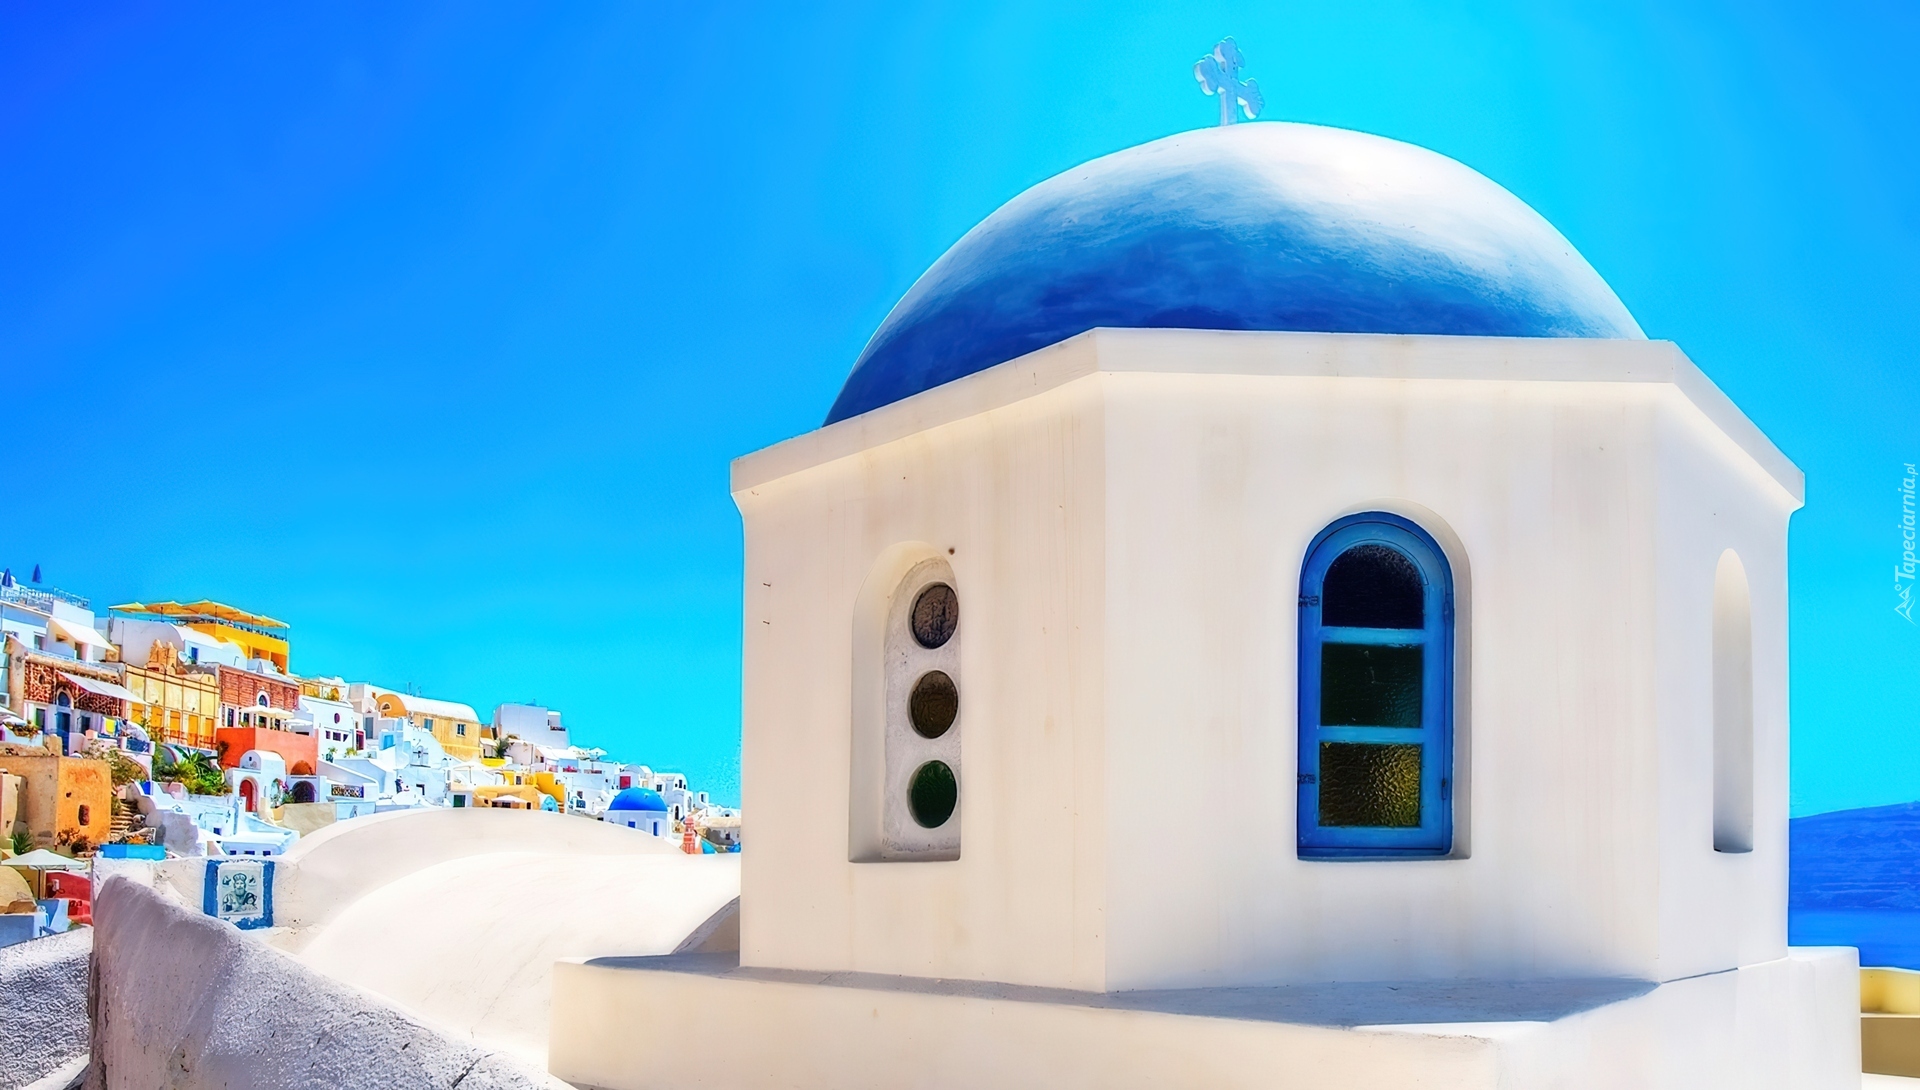 Cerkiew, Santorini, Grecja, Niebieska, Kopuła